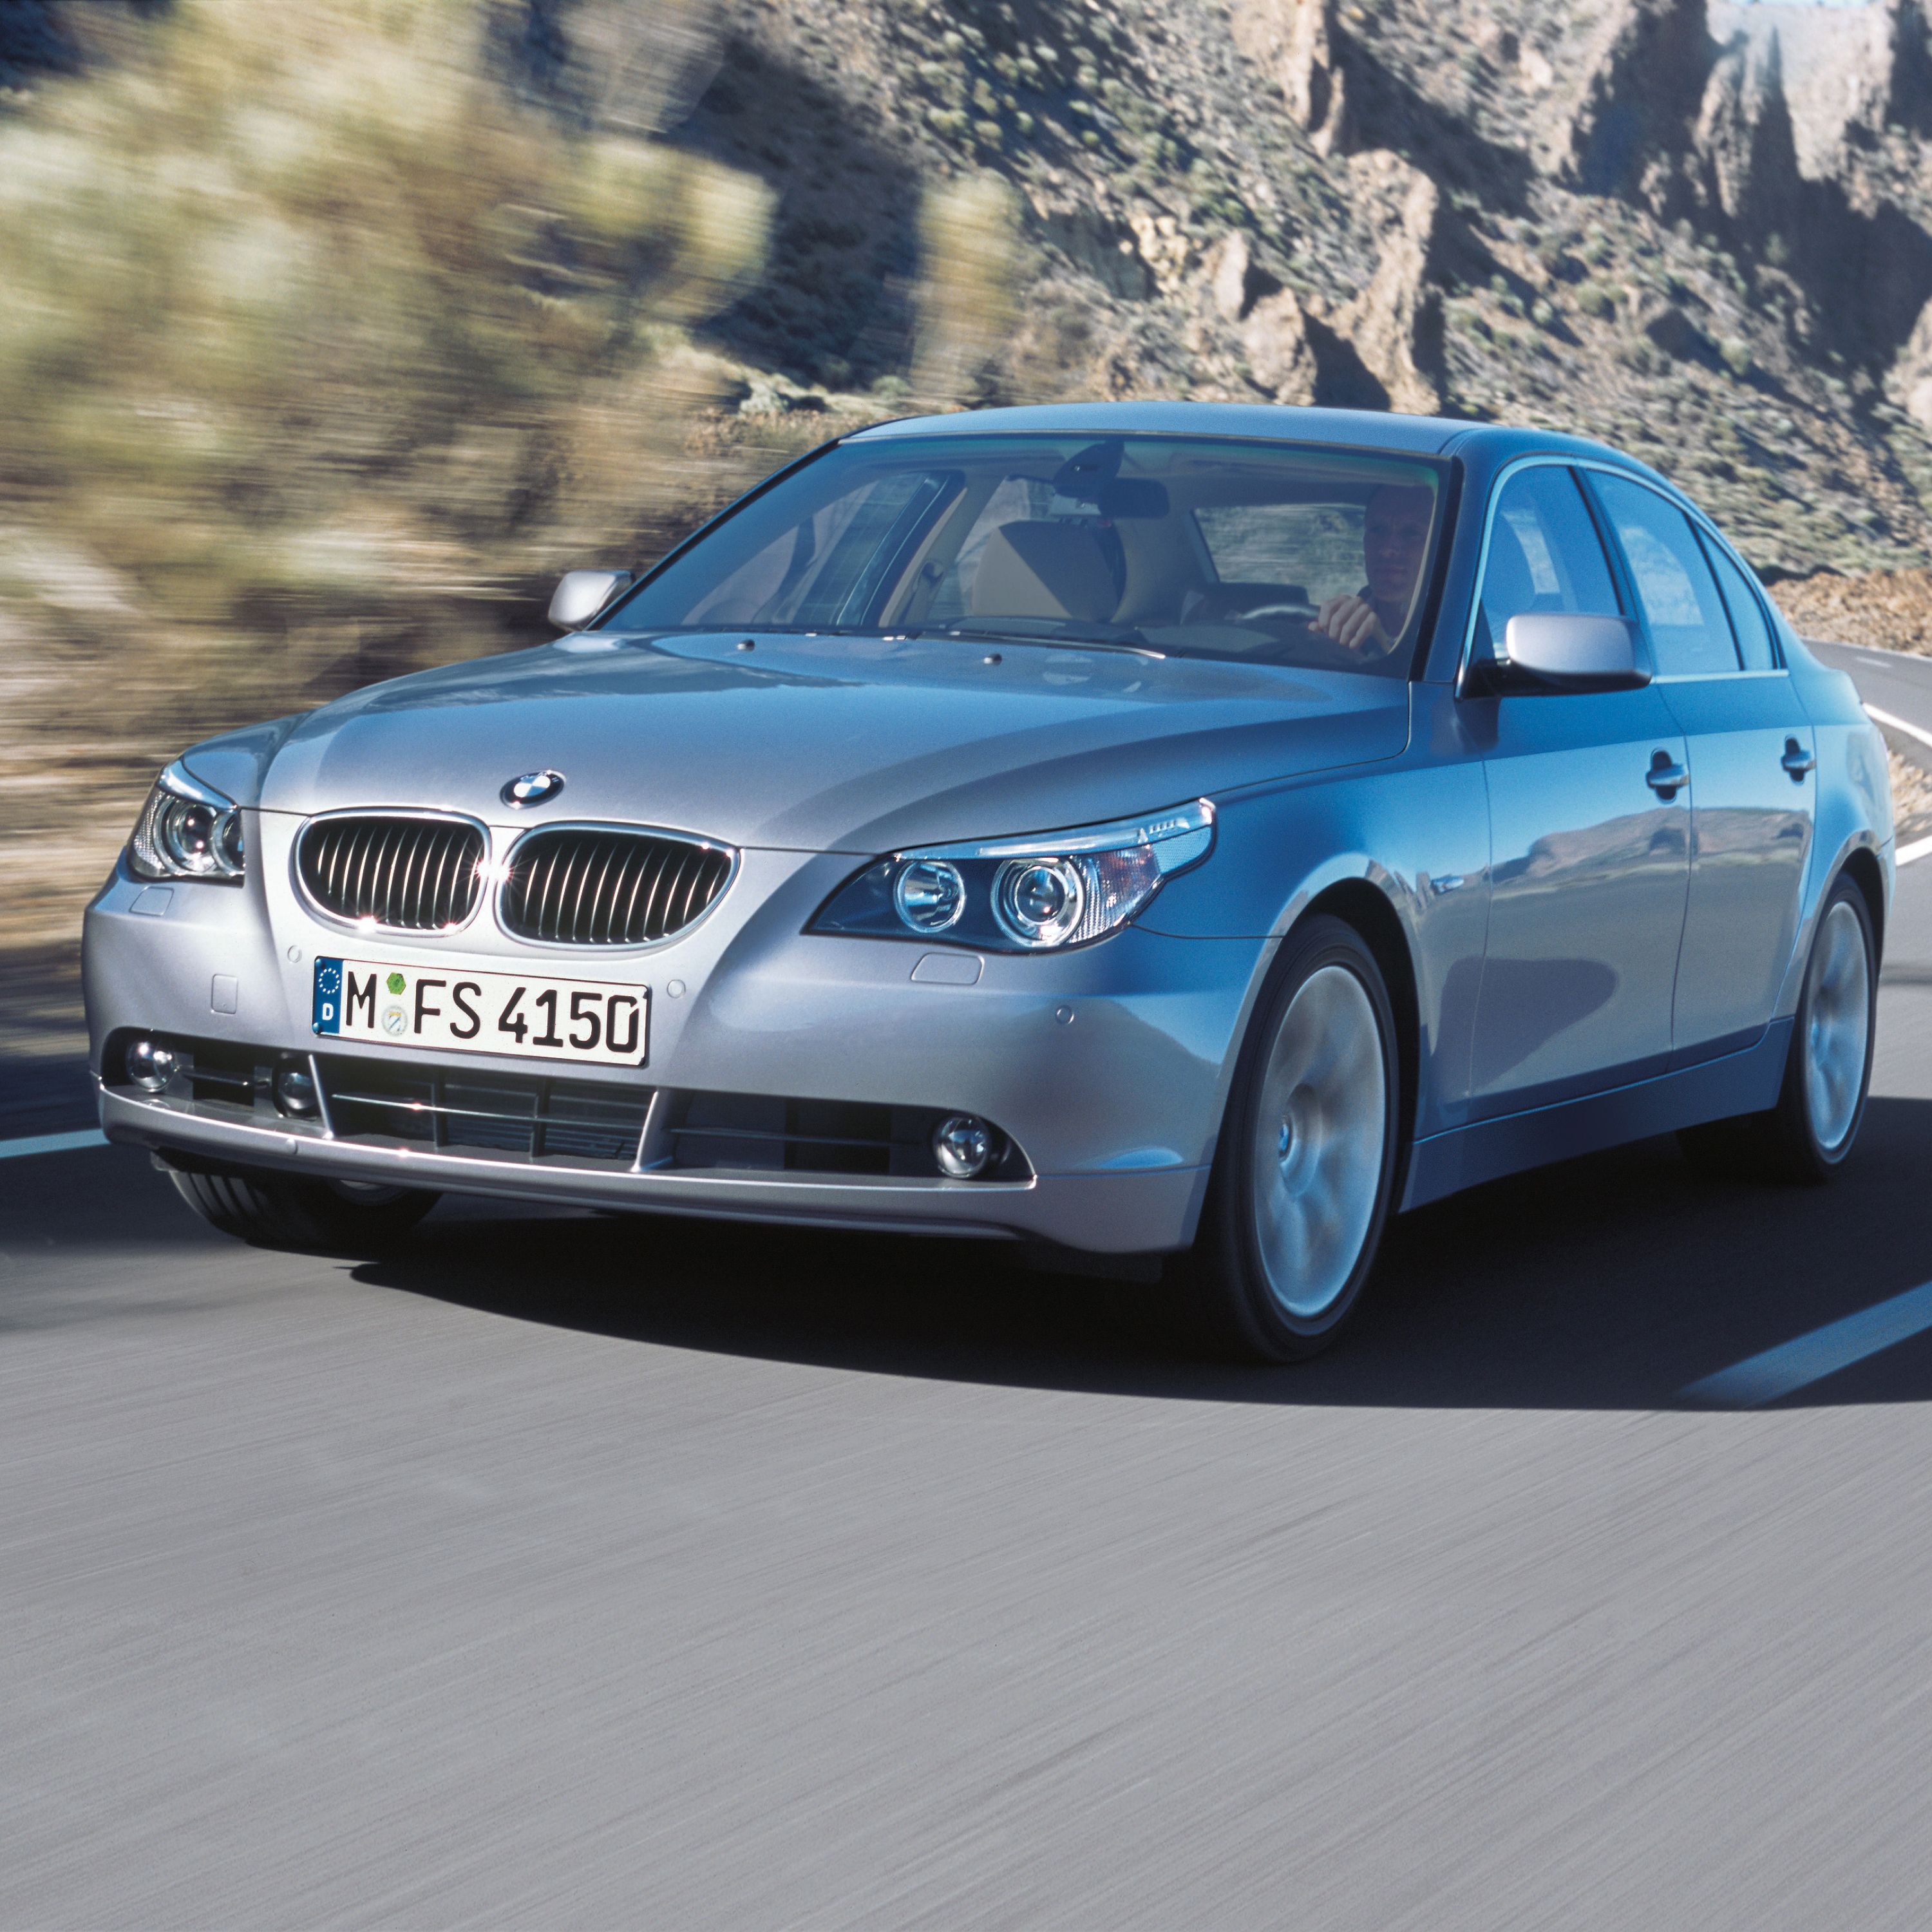 BMW 5 Series Sedan E60 three-quarter frontal view while driving